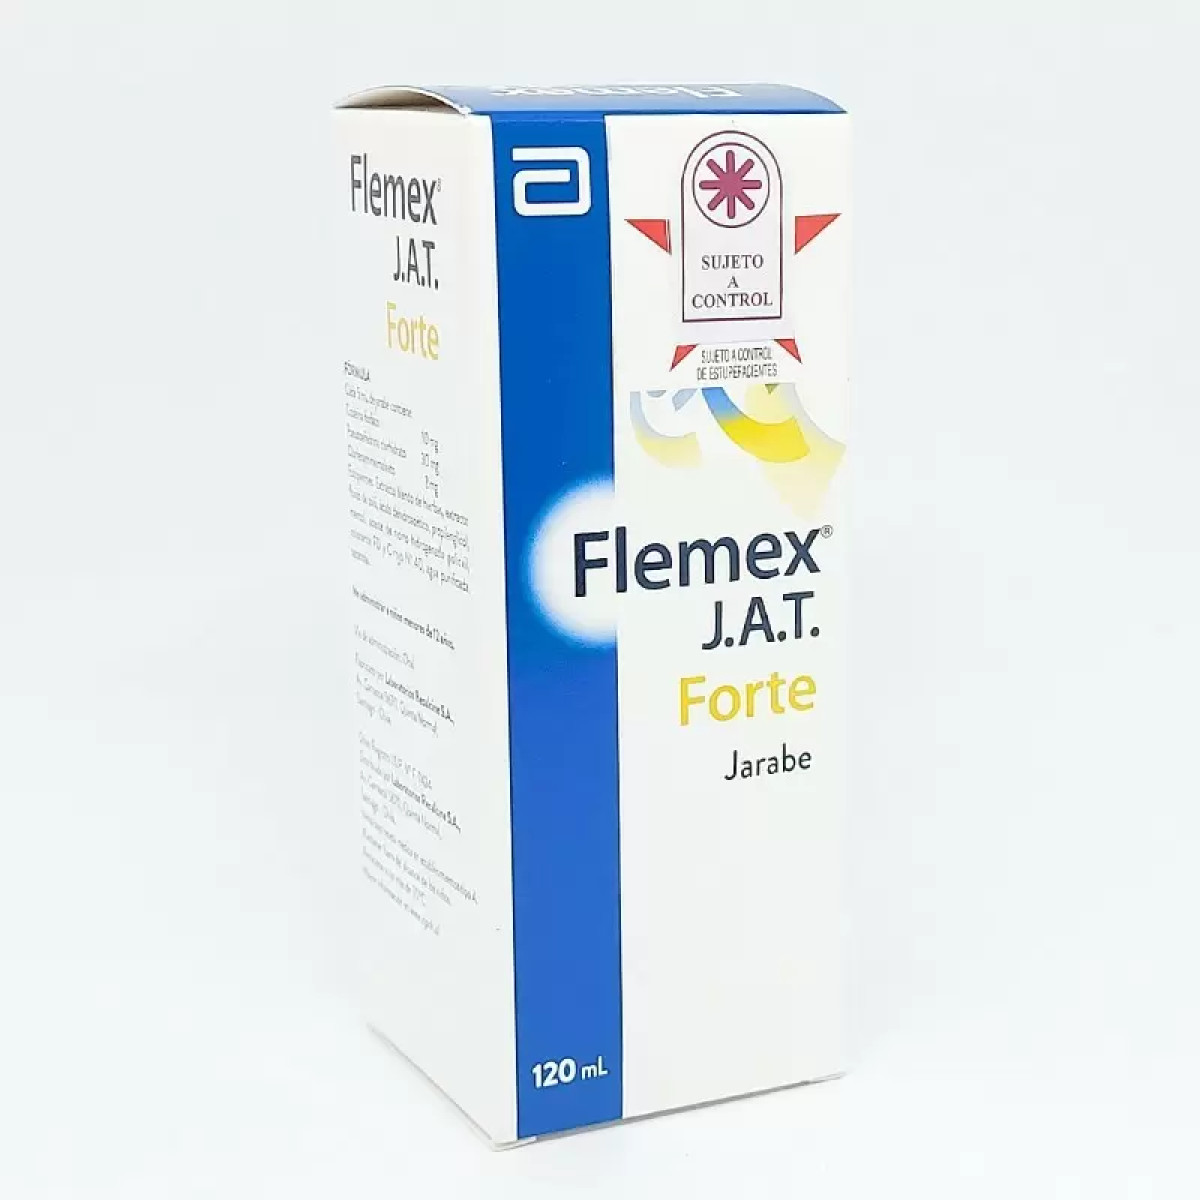 FLEMEX JAT FORTE 10 JBE X 120 ML ++